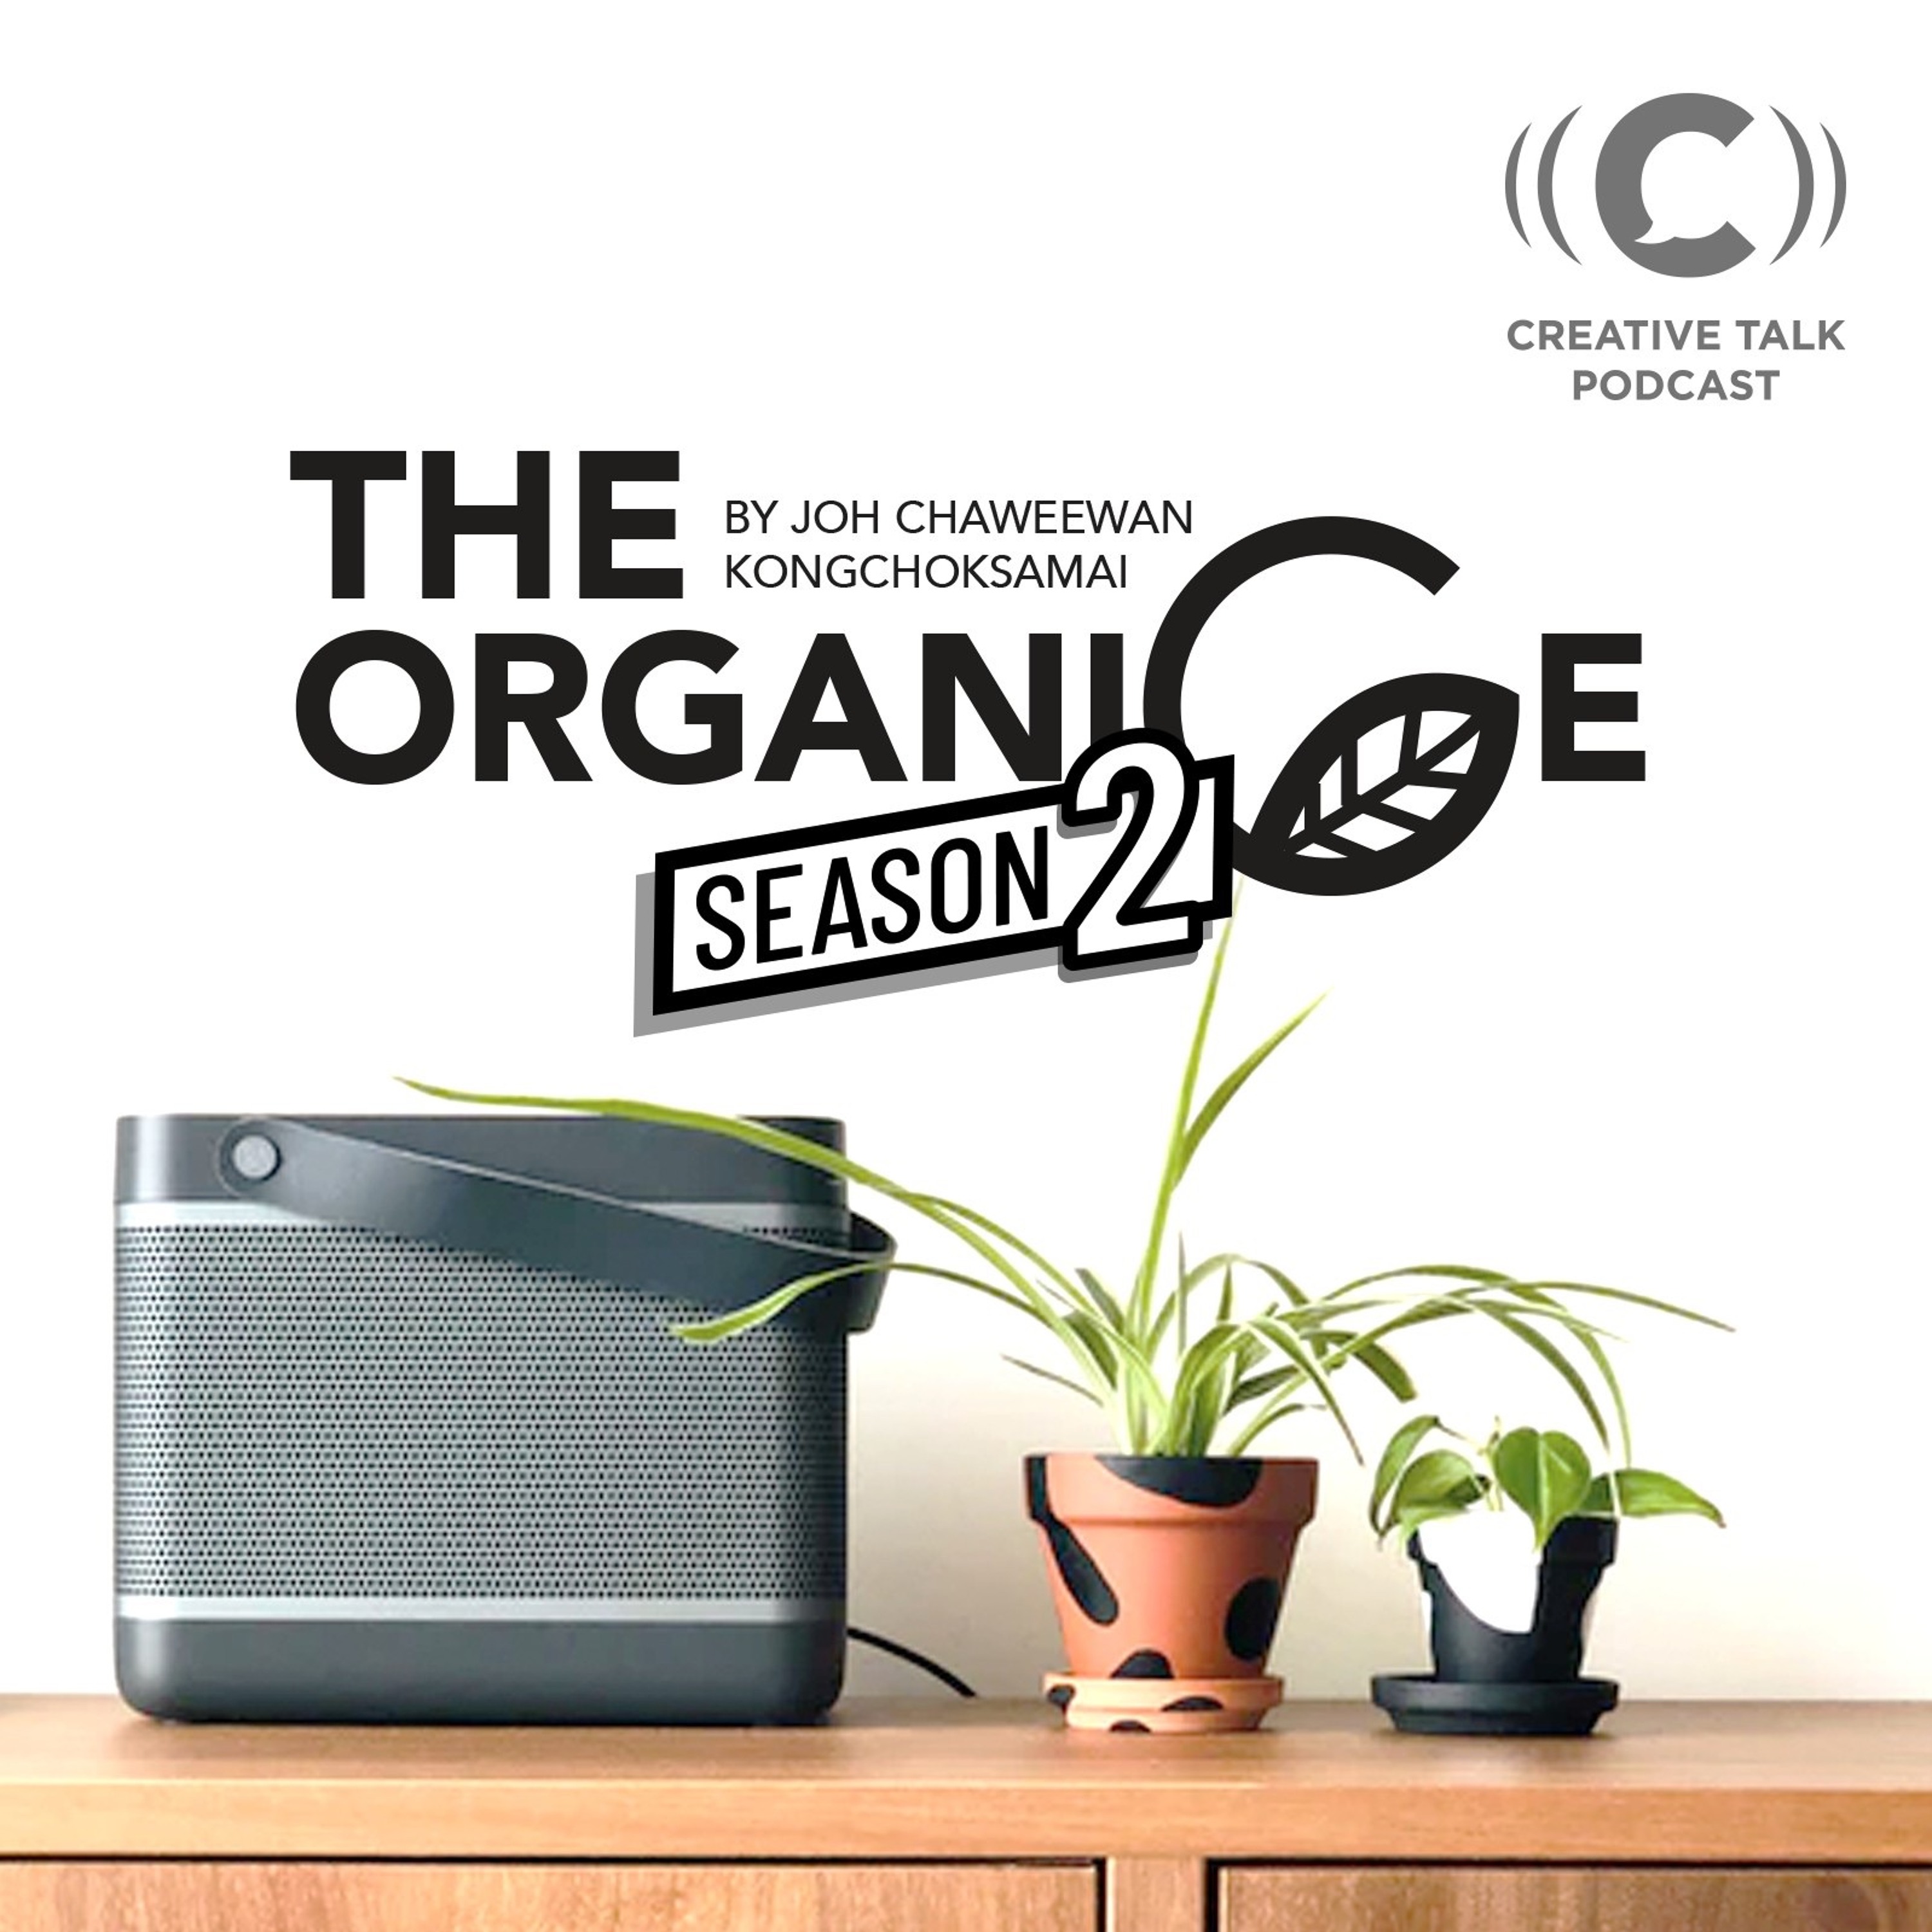 Organice259 - 10 ความเชื่อที่ผิดของการทำบ้านให้สะอาด